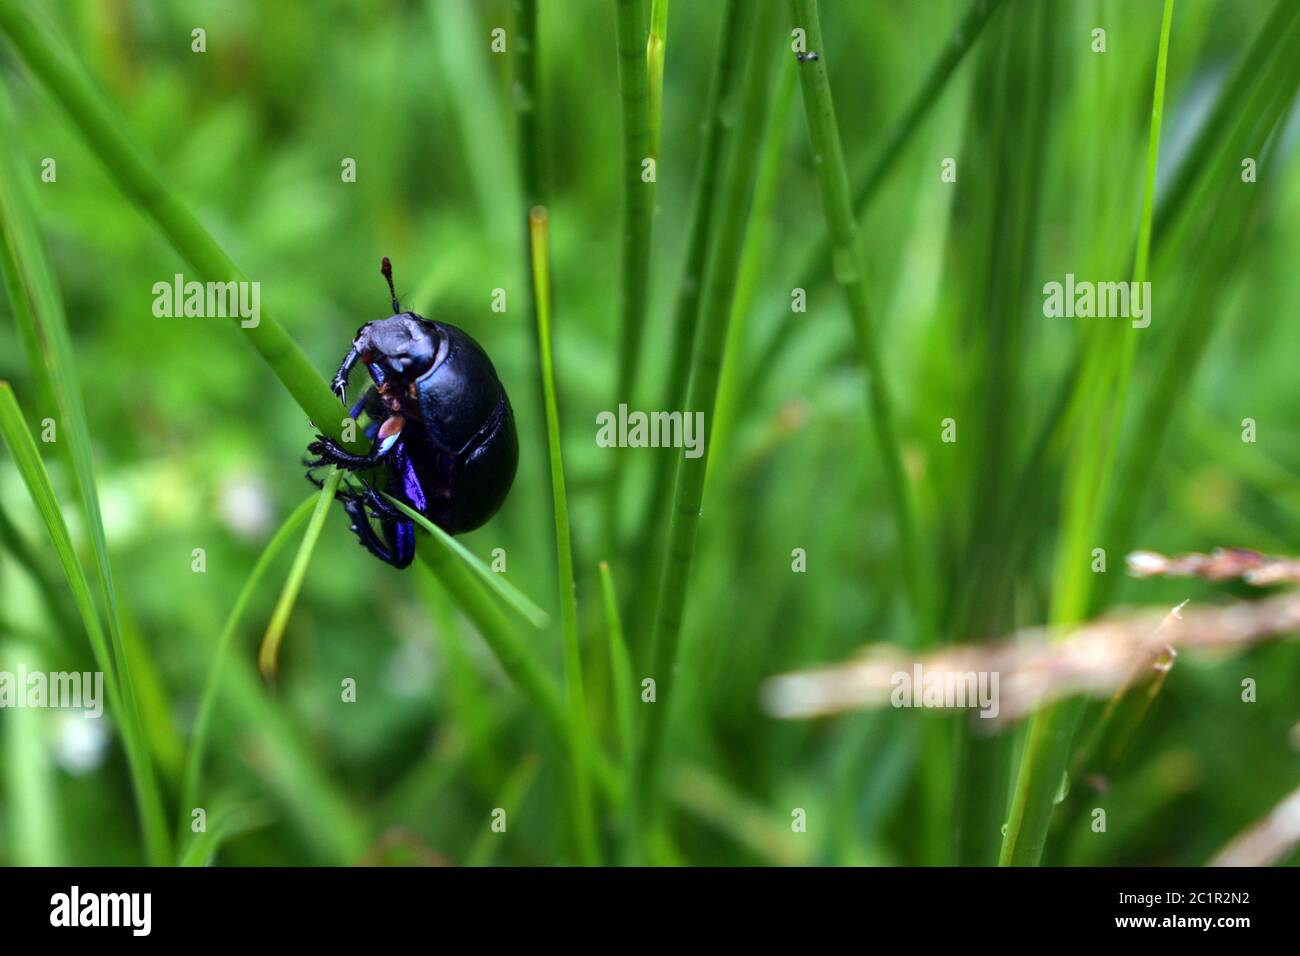 Dor Beetle climbing up a blade of grass Stock Photo